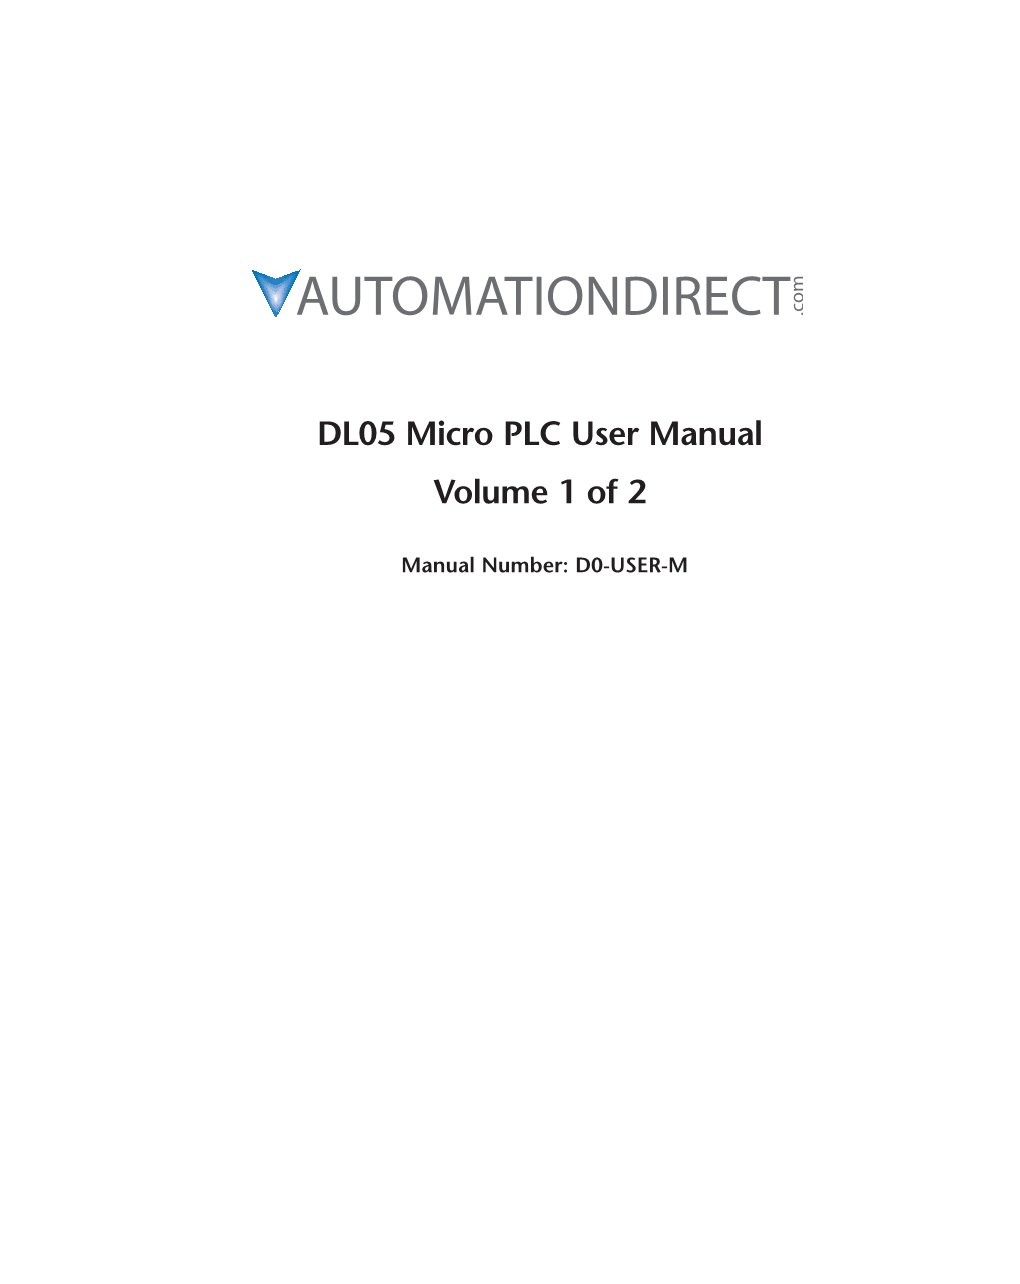 DL05 Micro PLC User Manual Volume 1 of 2